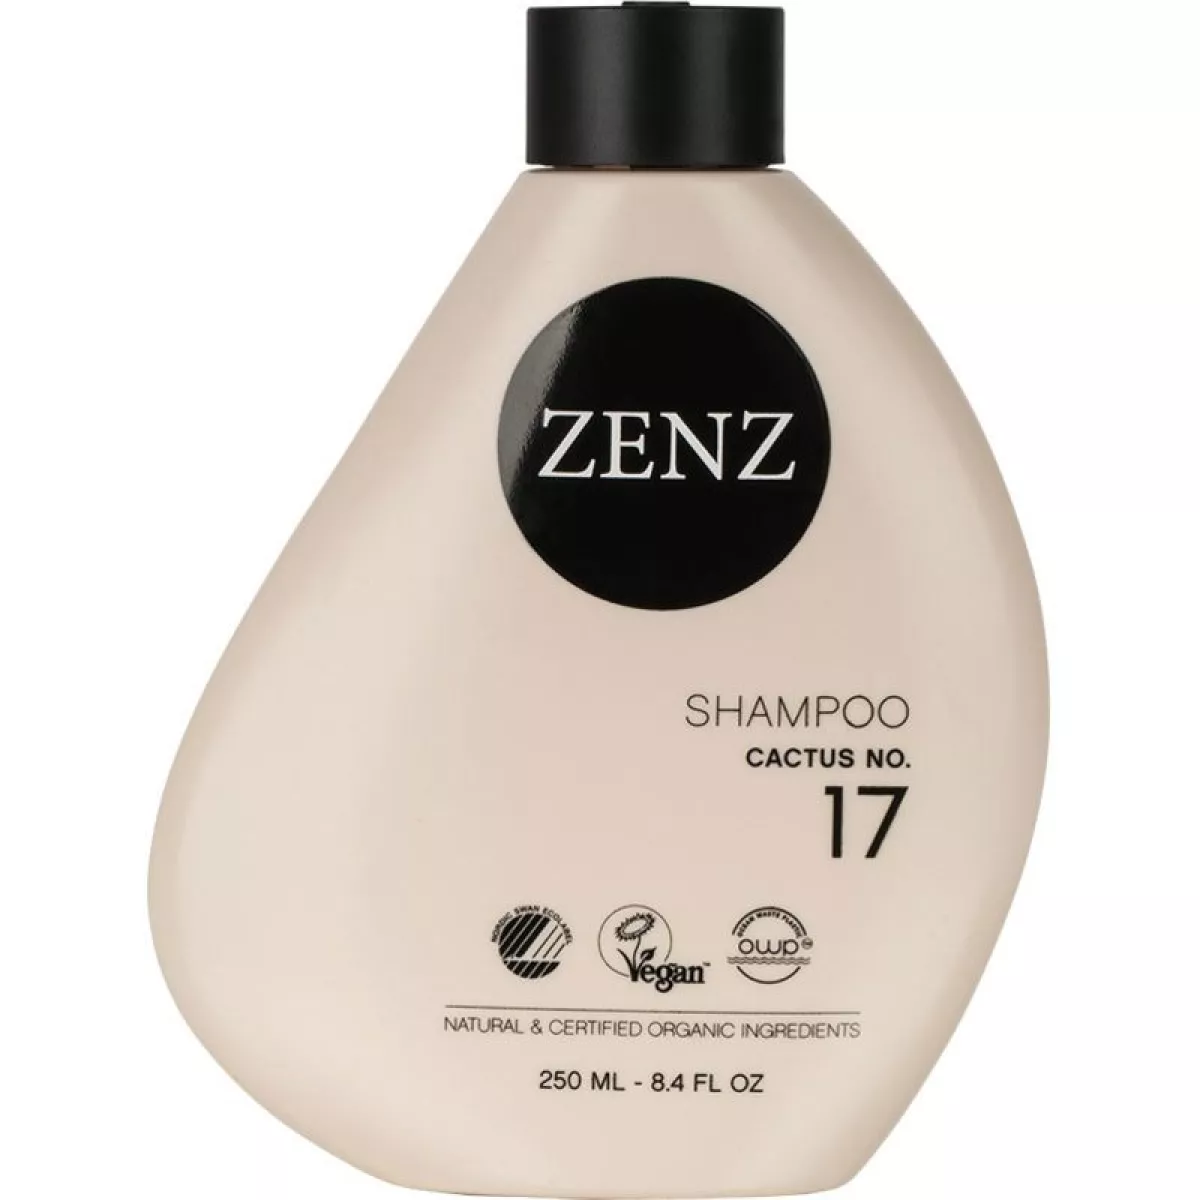 #1 - ZENZ Organic Cactus No. 17 Shampoo 250 ml